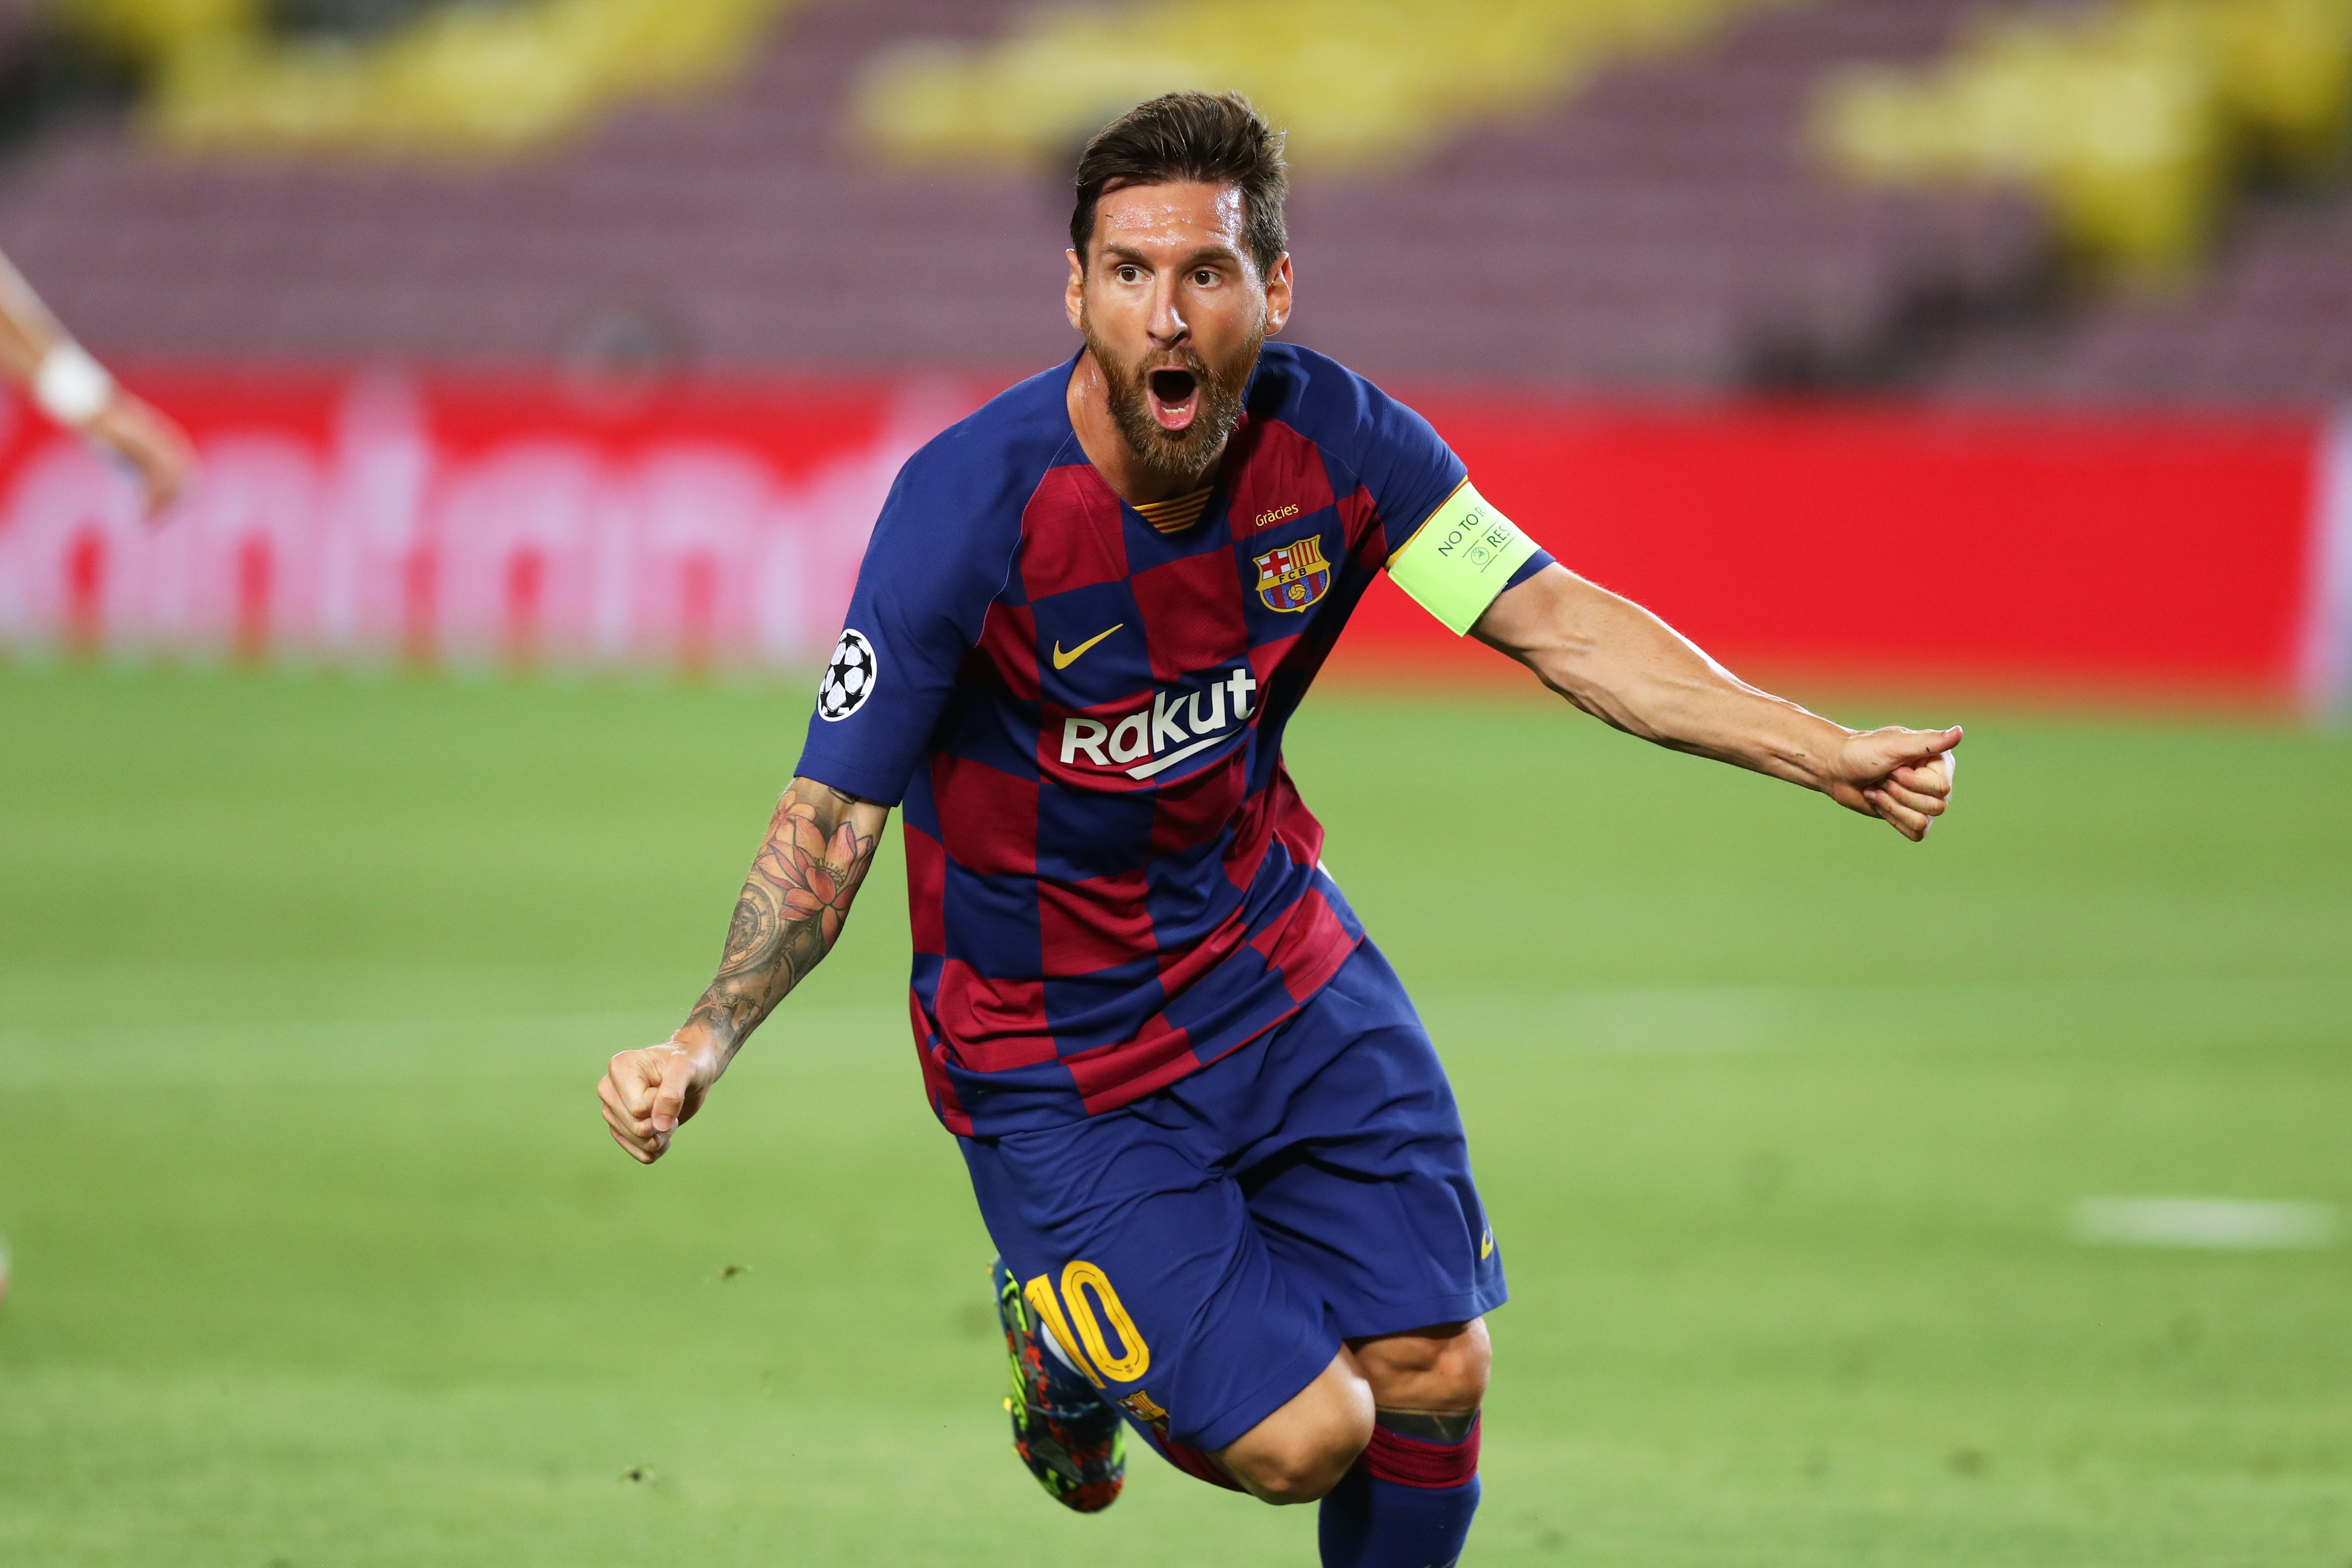 El mensaje arengador de Leo Messi en la Champions después de ganar al Nápoles